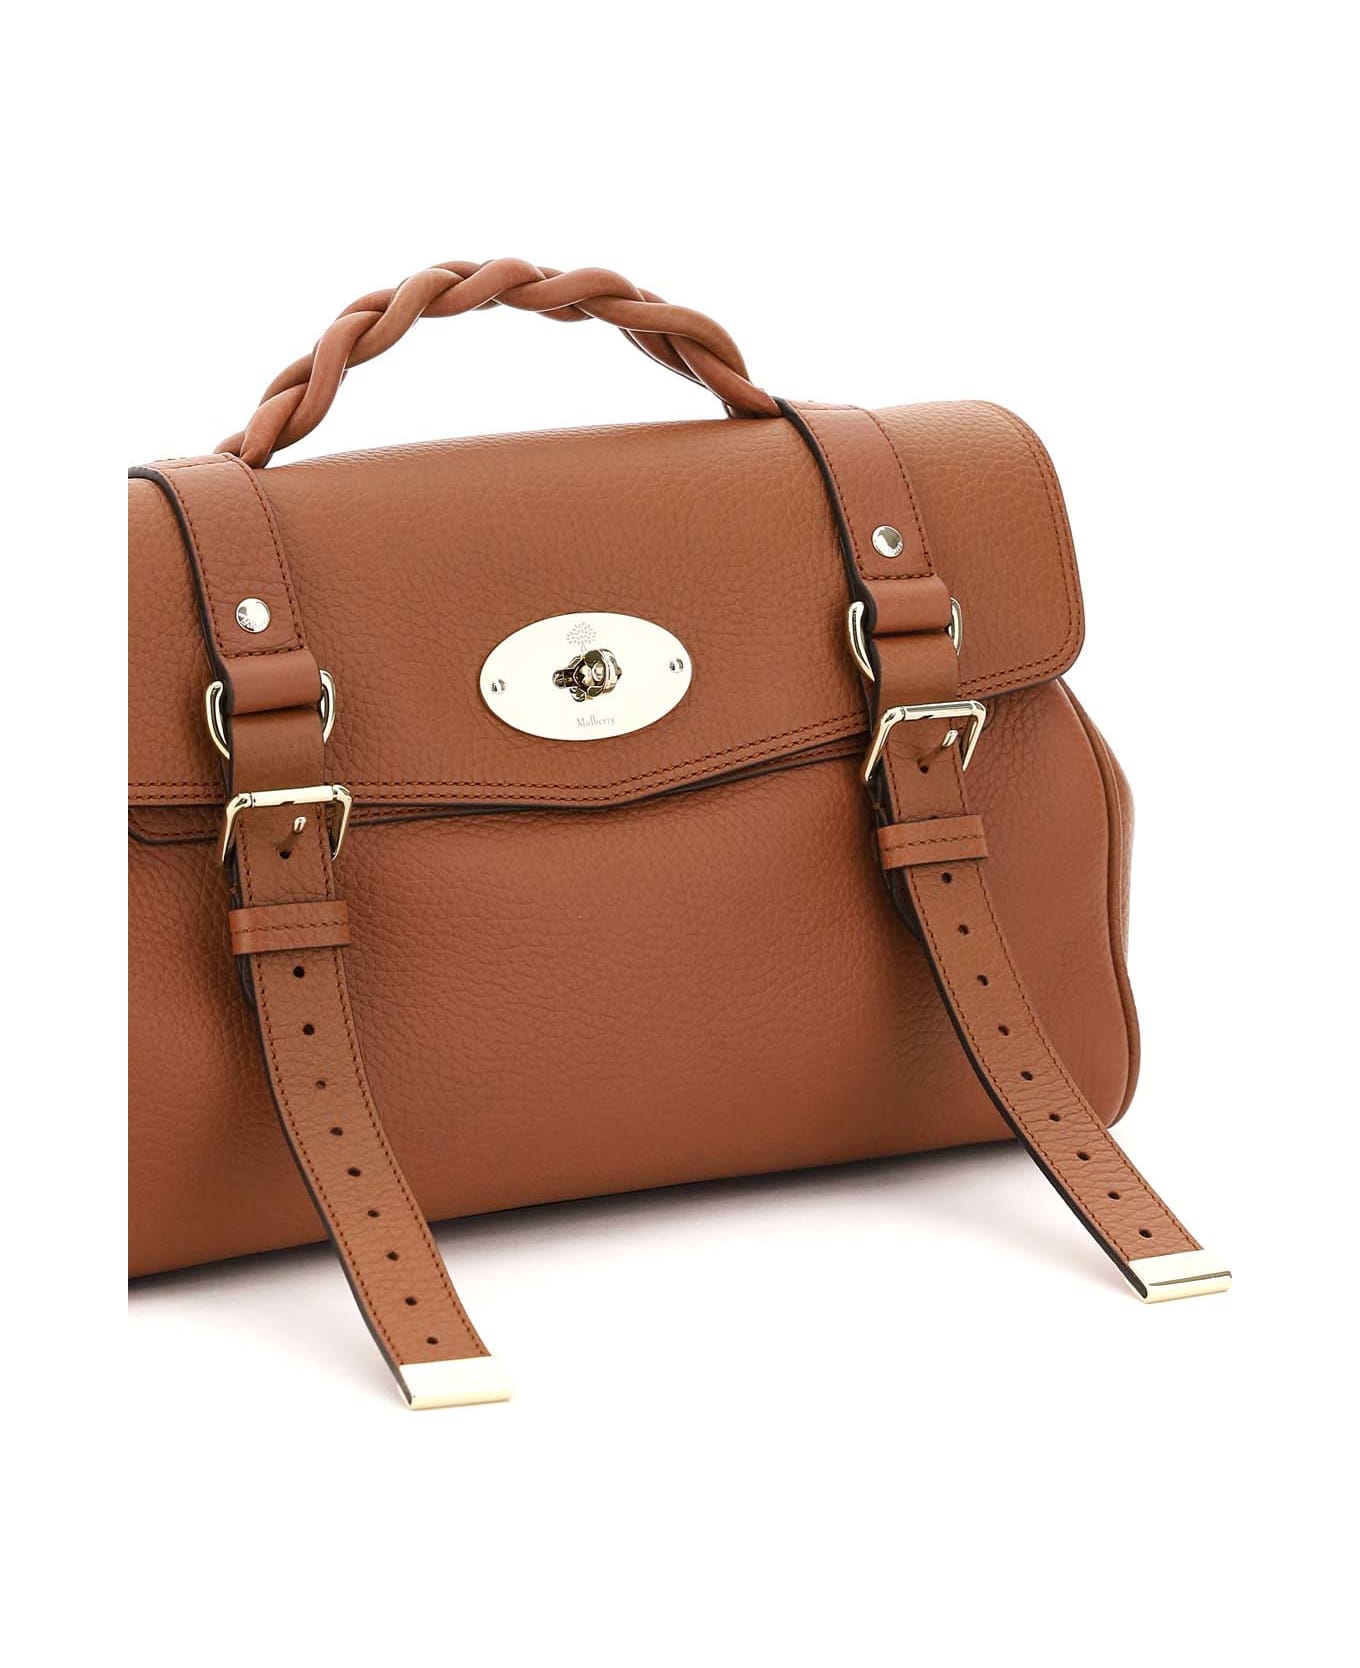 Mulberry Alexa Medium Handbag - CHESTNUT (Brown) トートバッグ